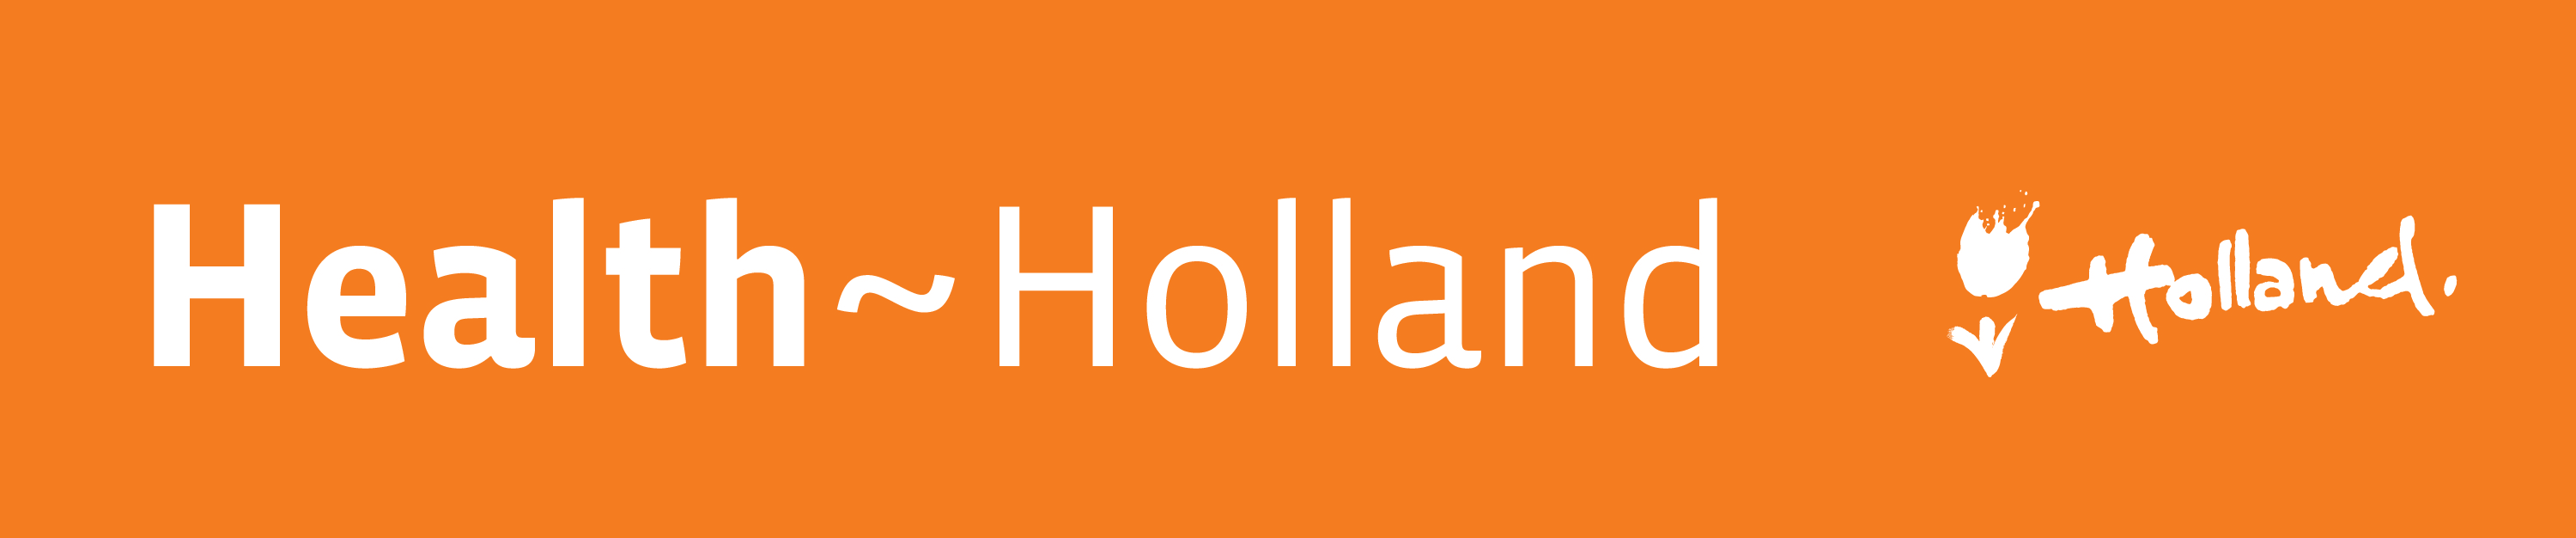 health holland